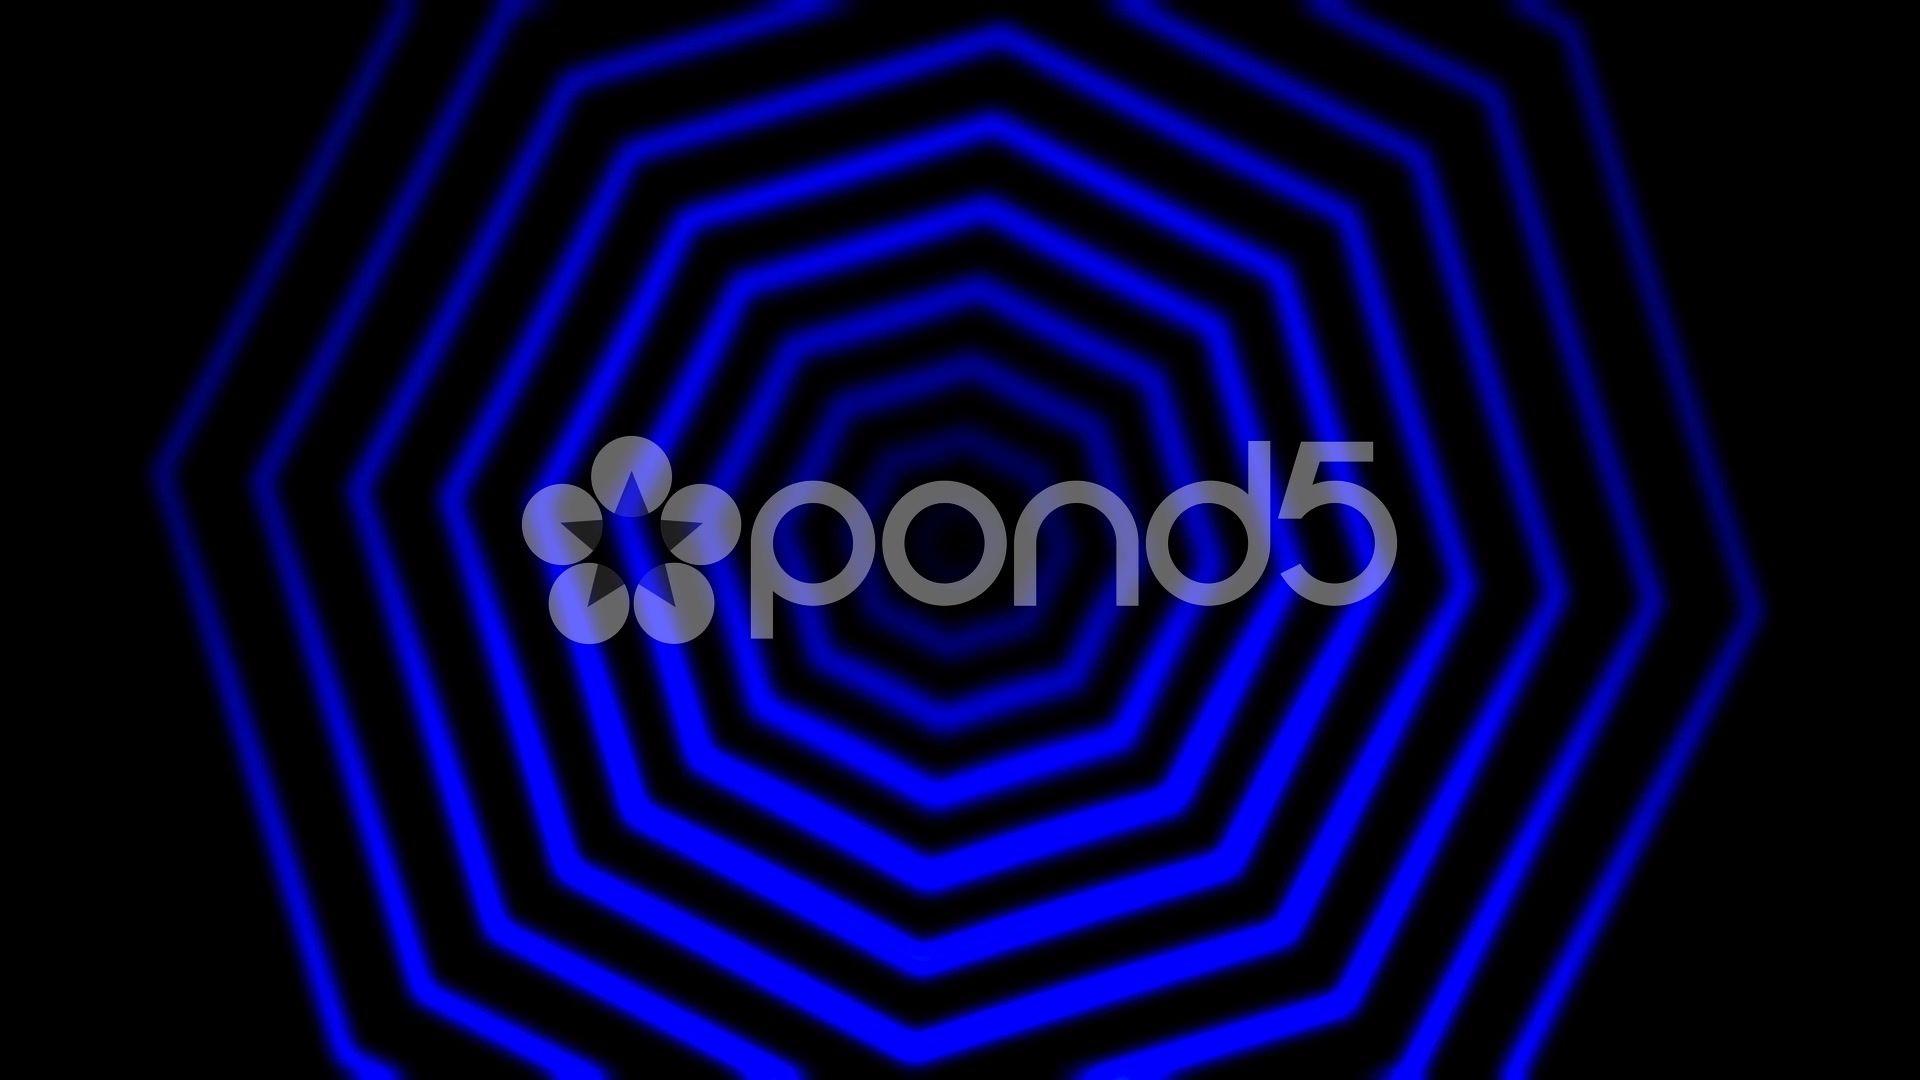 Blue Octagon Logo - Blue Octagon Tunnel HD & 4K Stock Footage